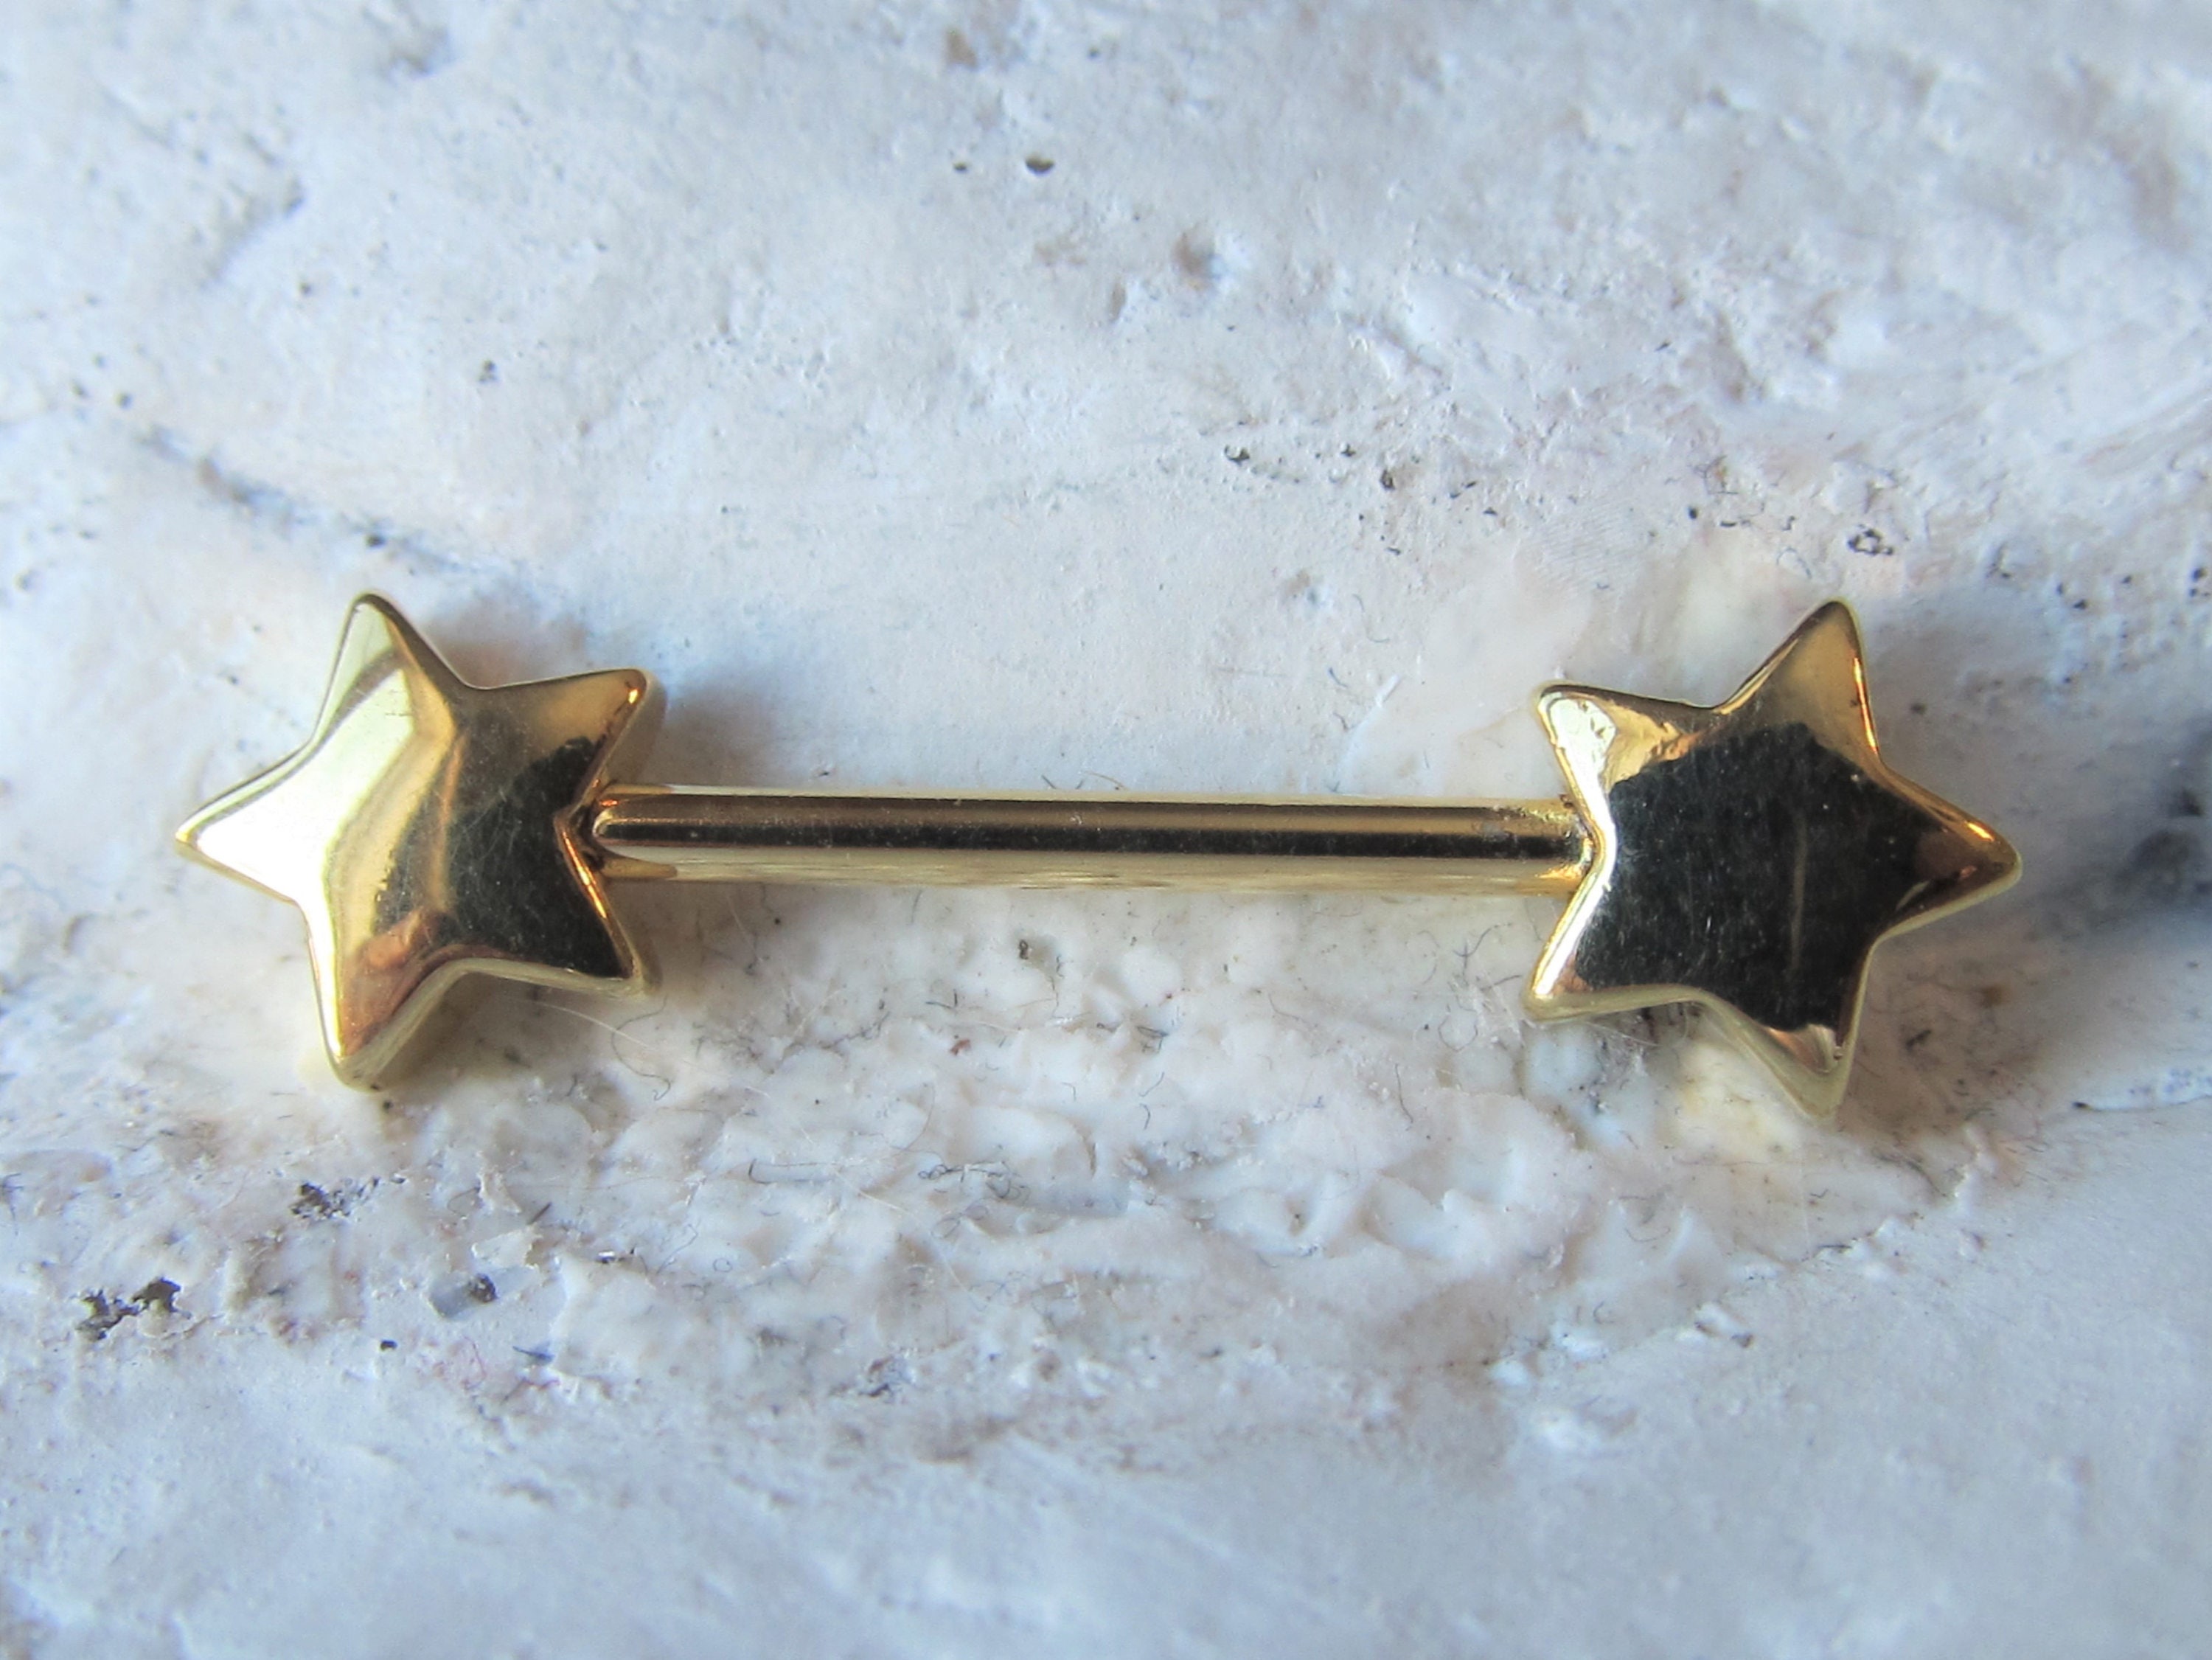 Titanium Cone / Spike Nipple Barbell, Nipple Jewelry Studs 16g 14g Nipple  Piercing Straight Barbell Externally Threaded 